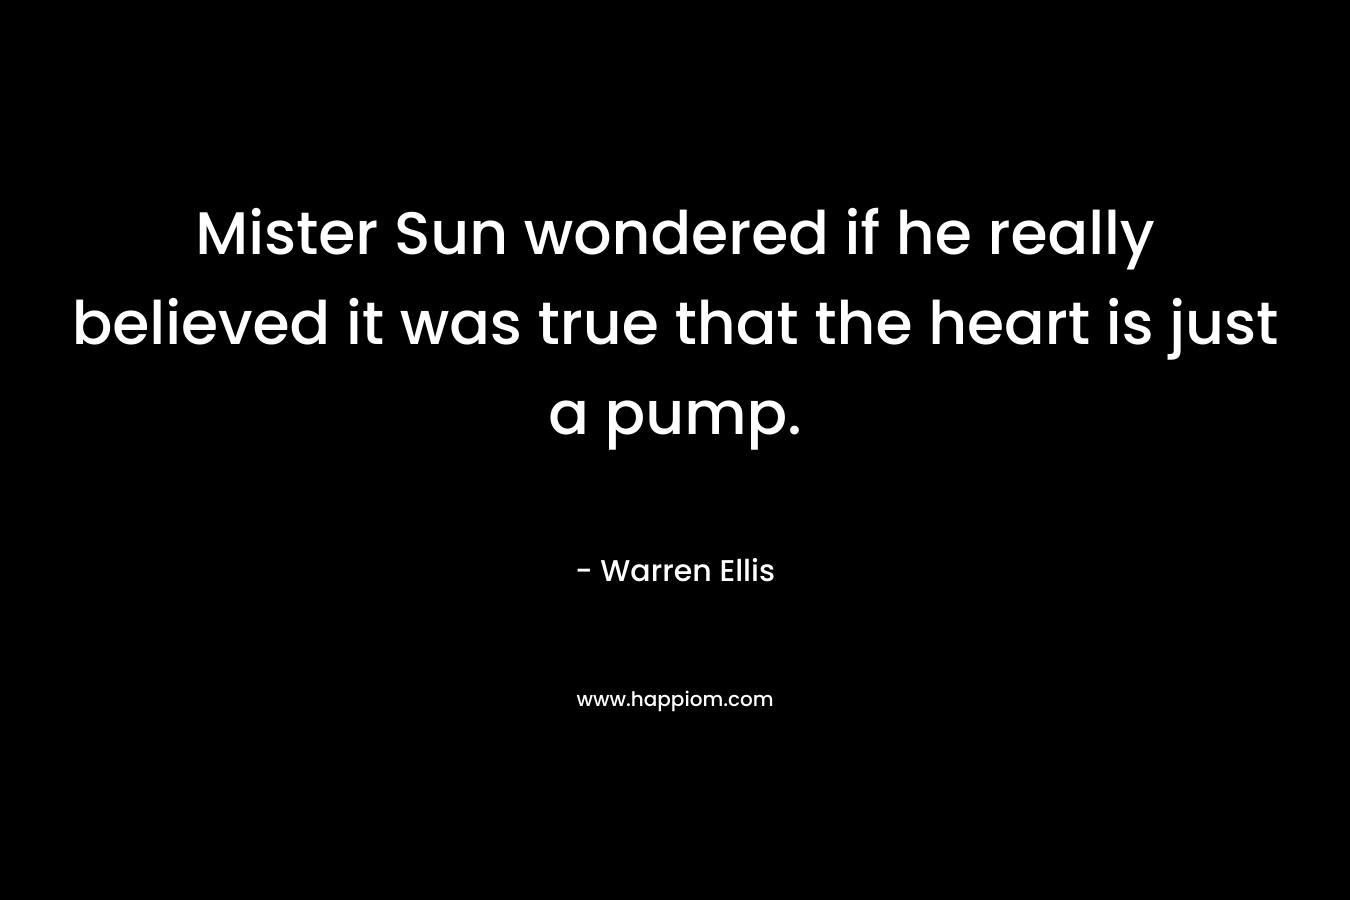 Mister Sun wondered if he really believed it was true that the heart is just a pump. – Warren Ellis